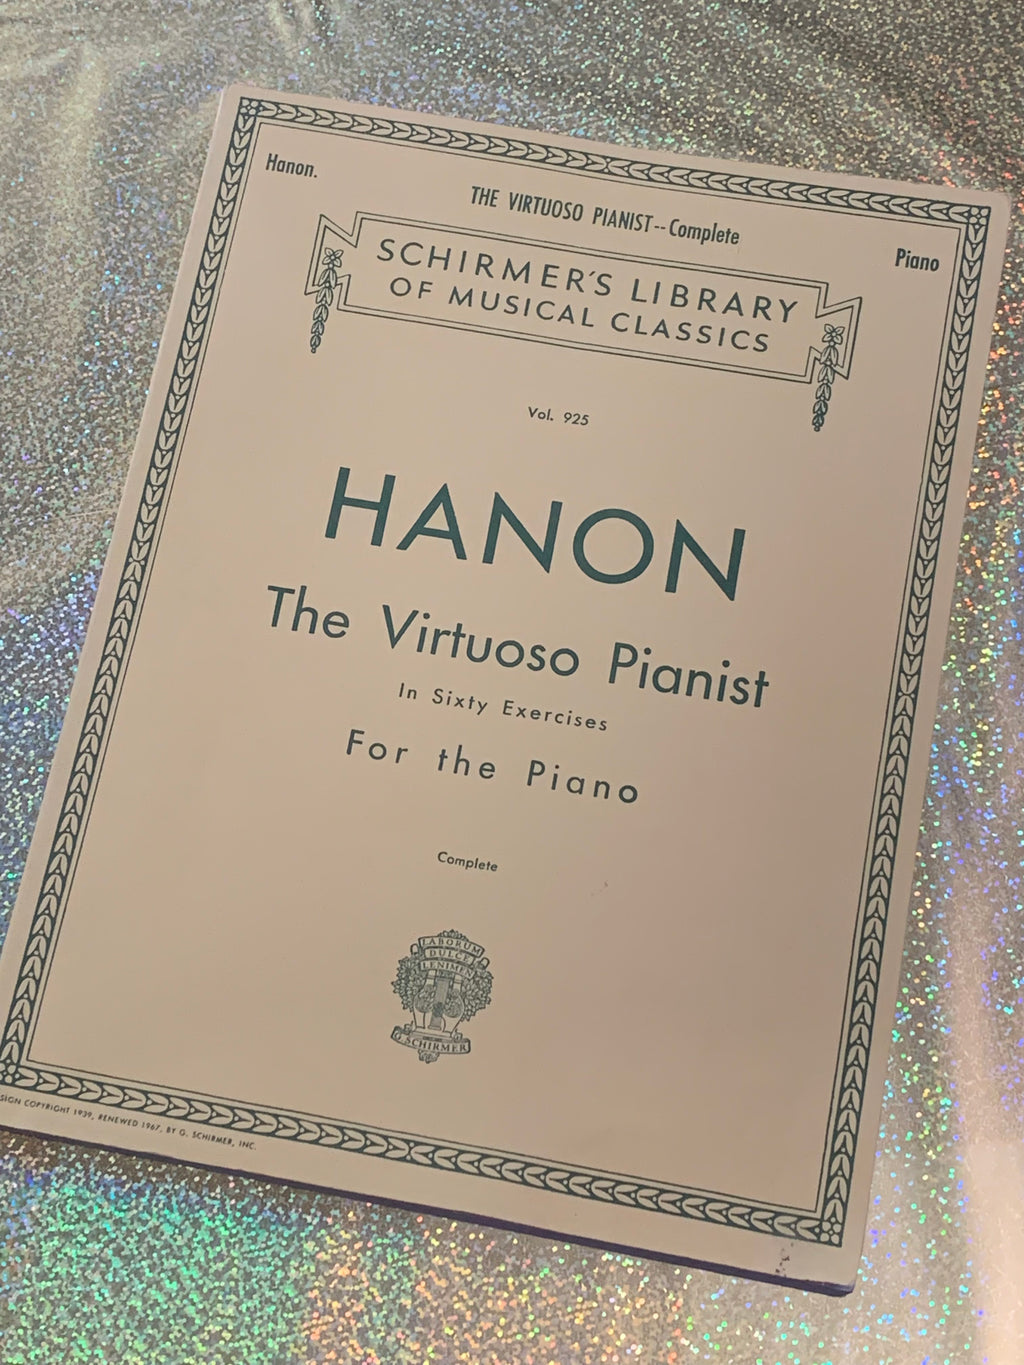 Hanon The VIrtuoso Pianist in 60 Exercises for the Piano: Vol. 925